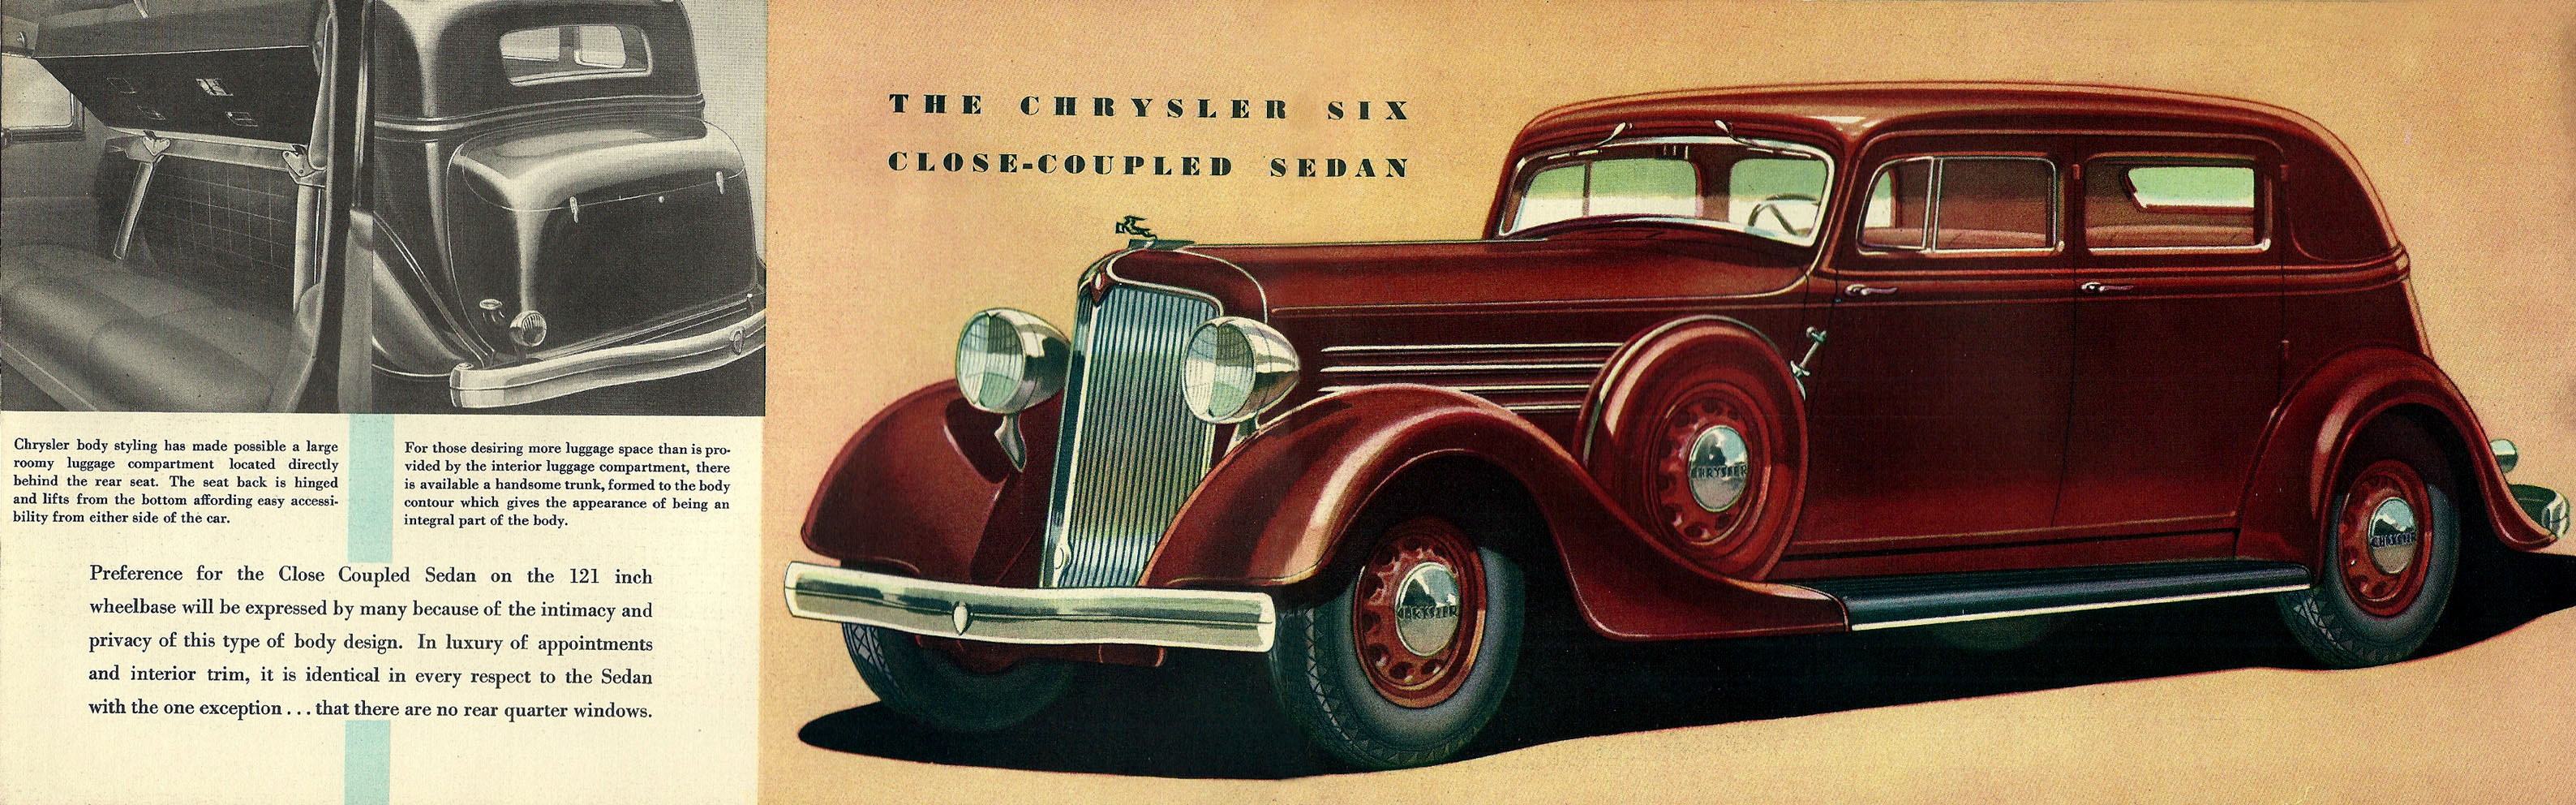 1934_Chrysler_Six-12-13